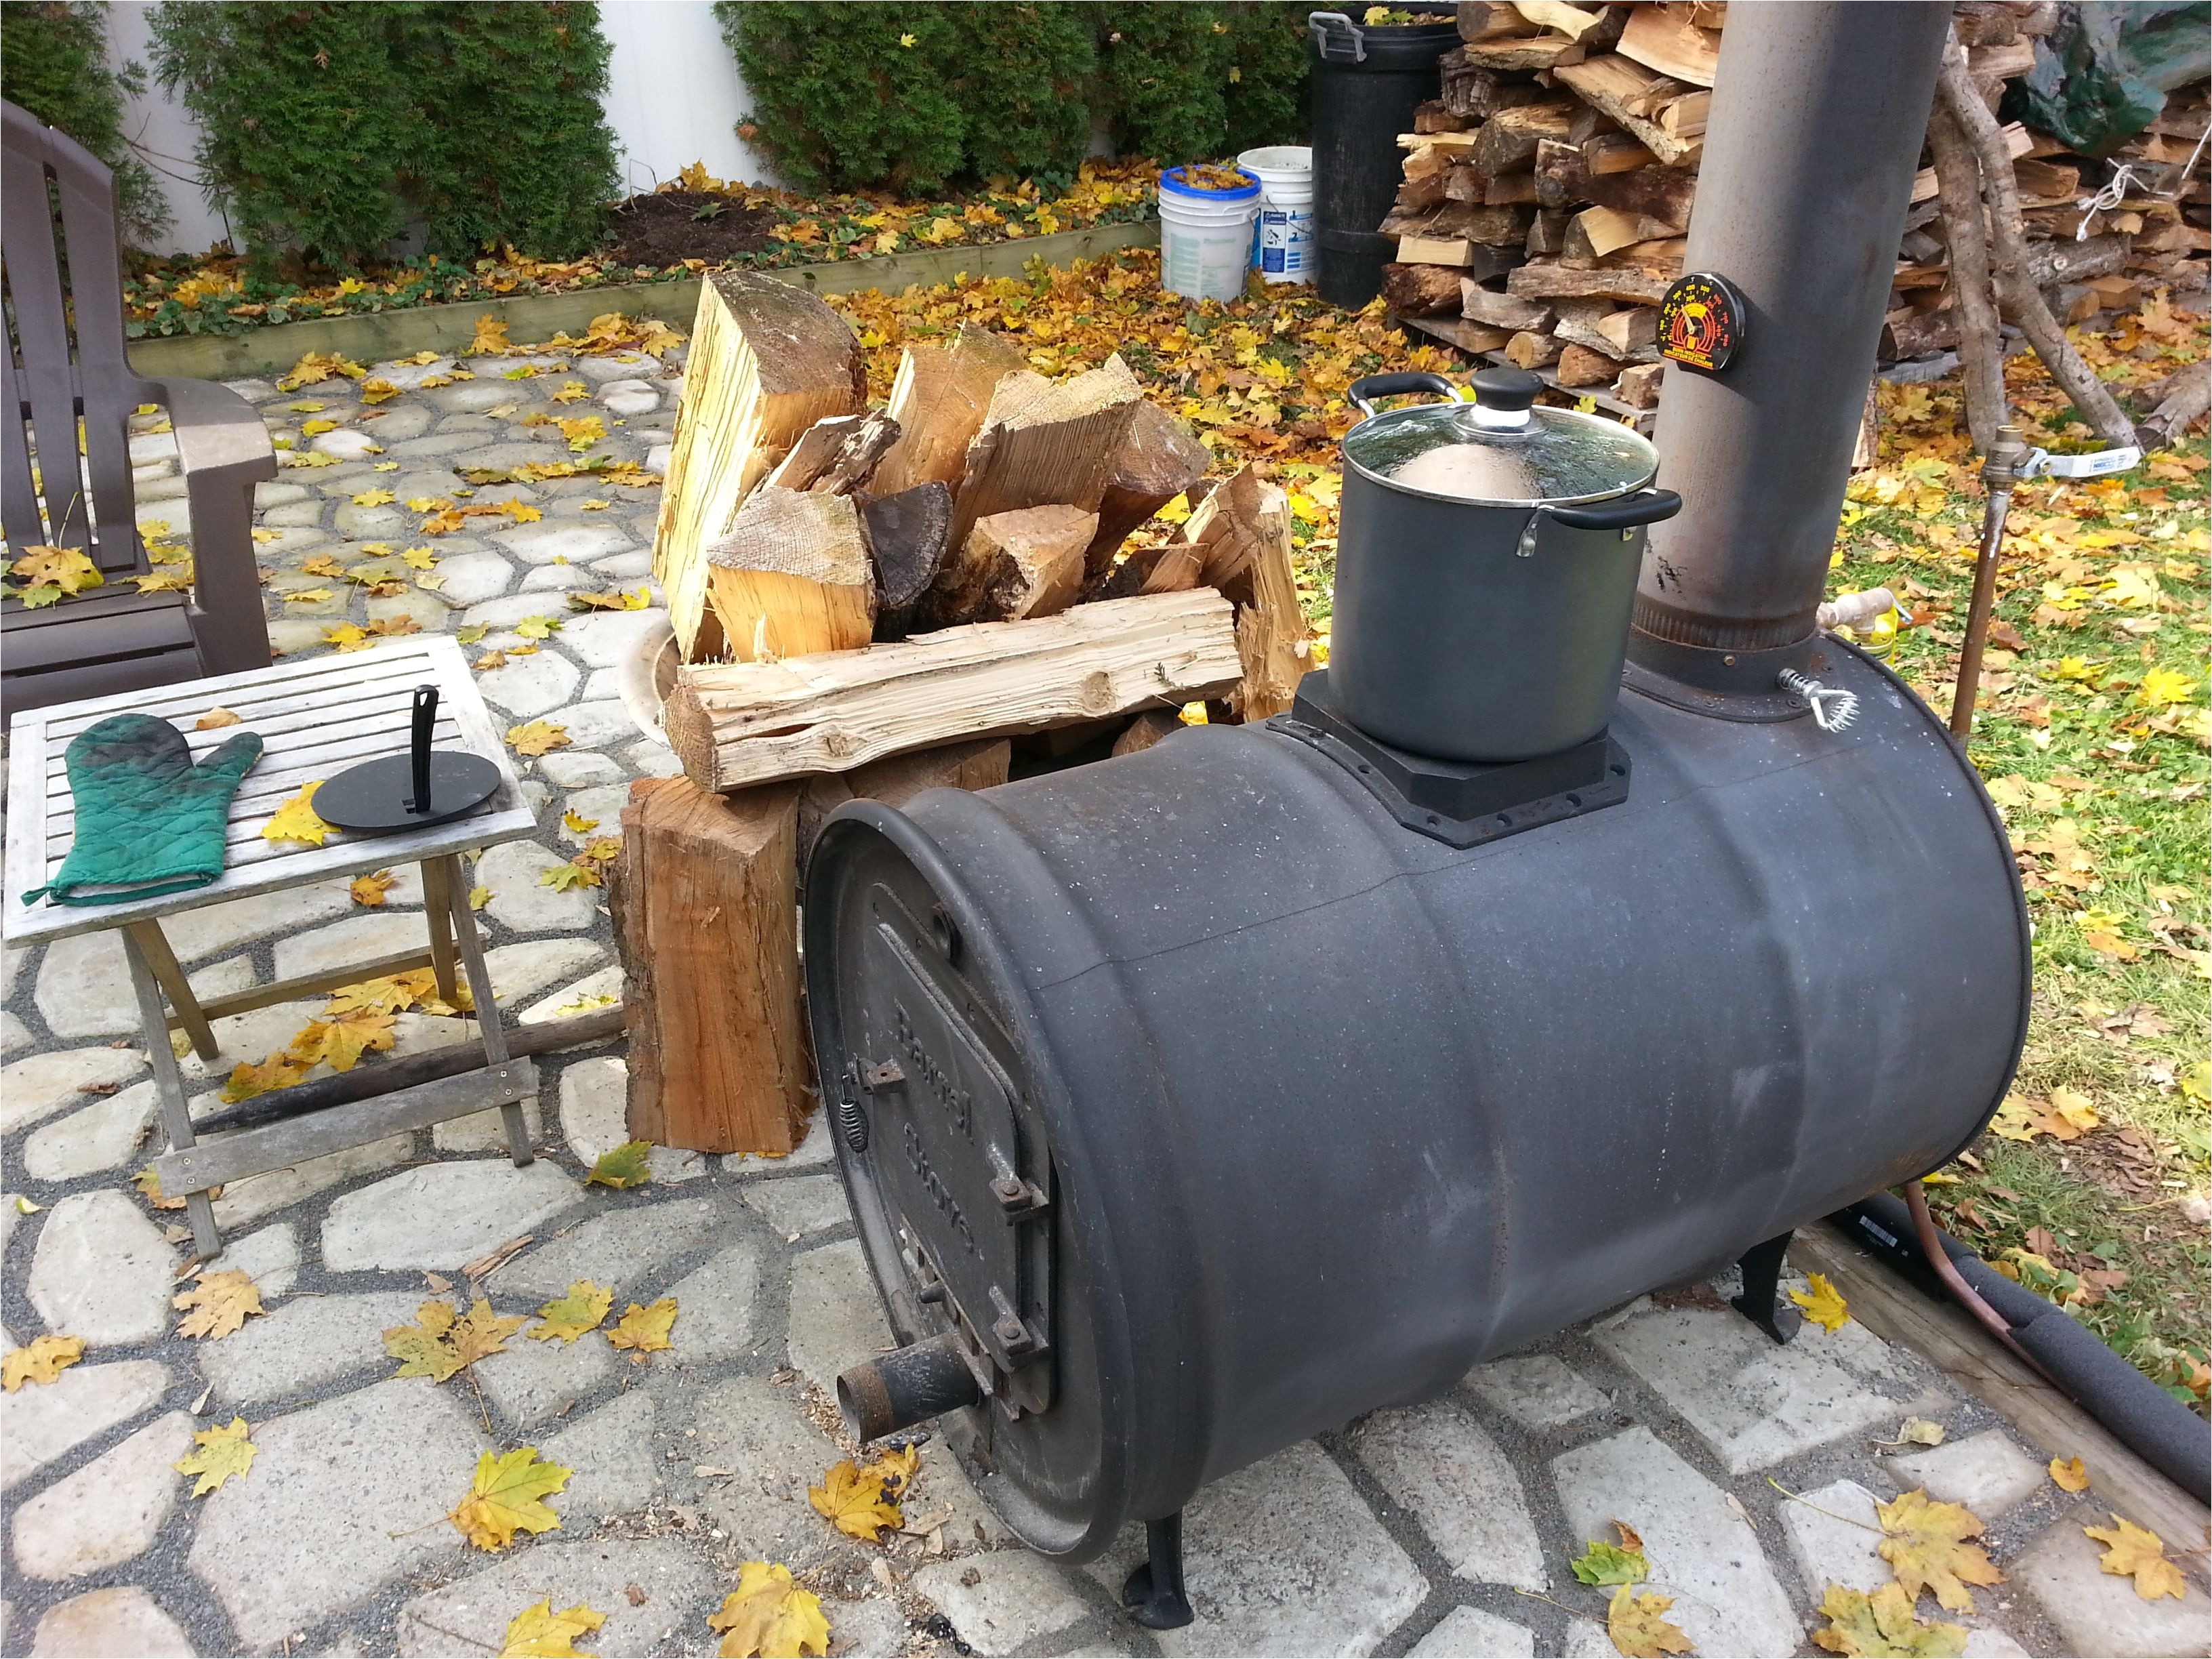 55 Gallon Drum Fireplace Barrel Stove 55 Gallon Drum Stove Kit Barrel Stove Kit Outdoor